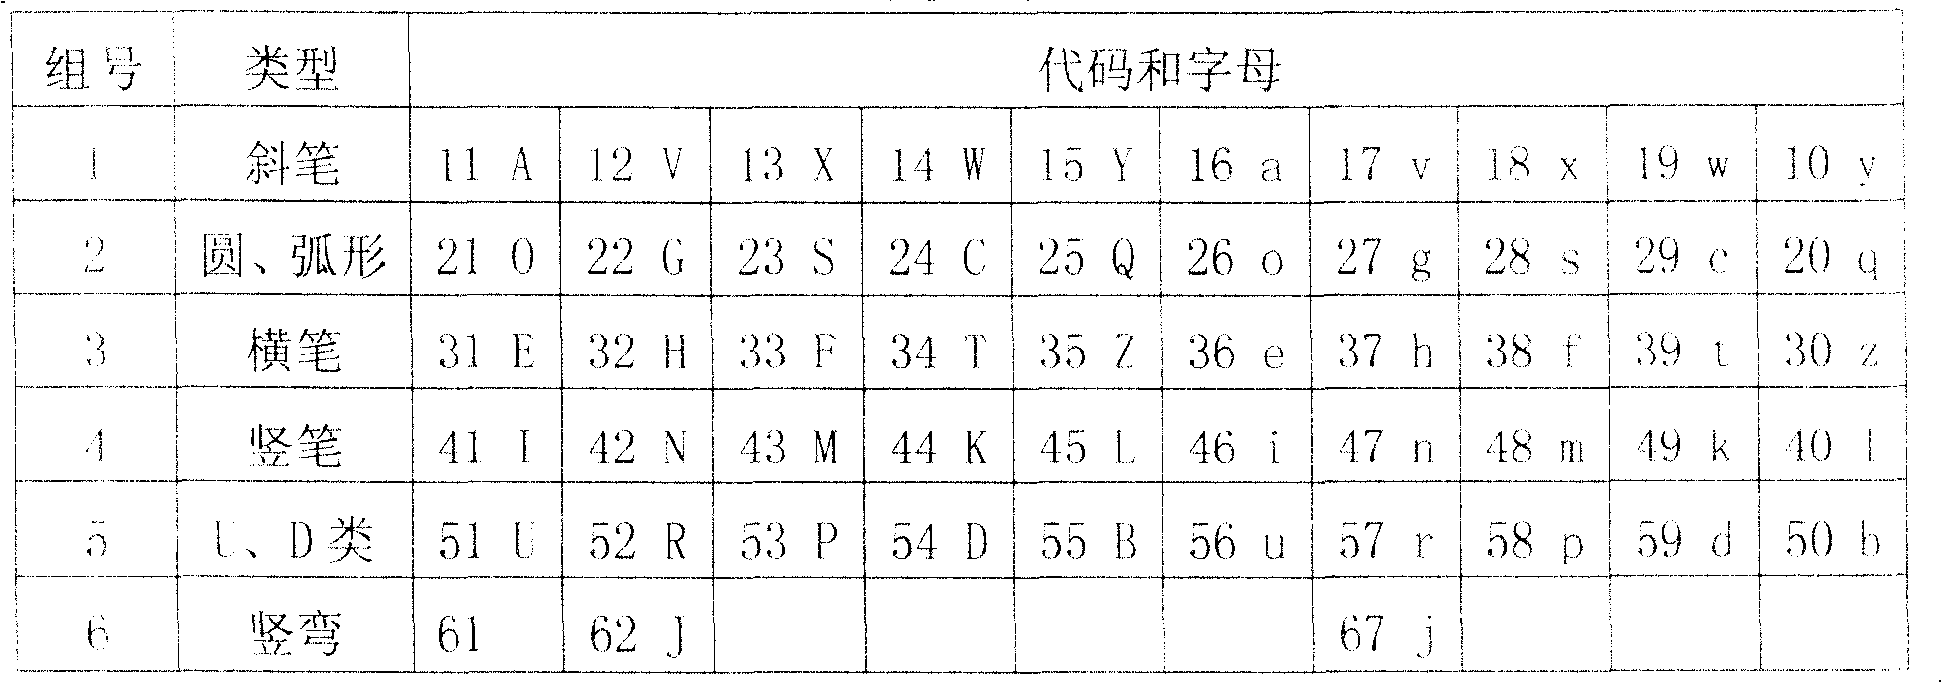 Digital keyboard English and Chinese input method